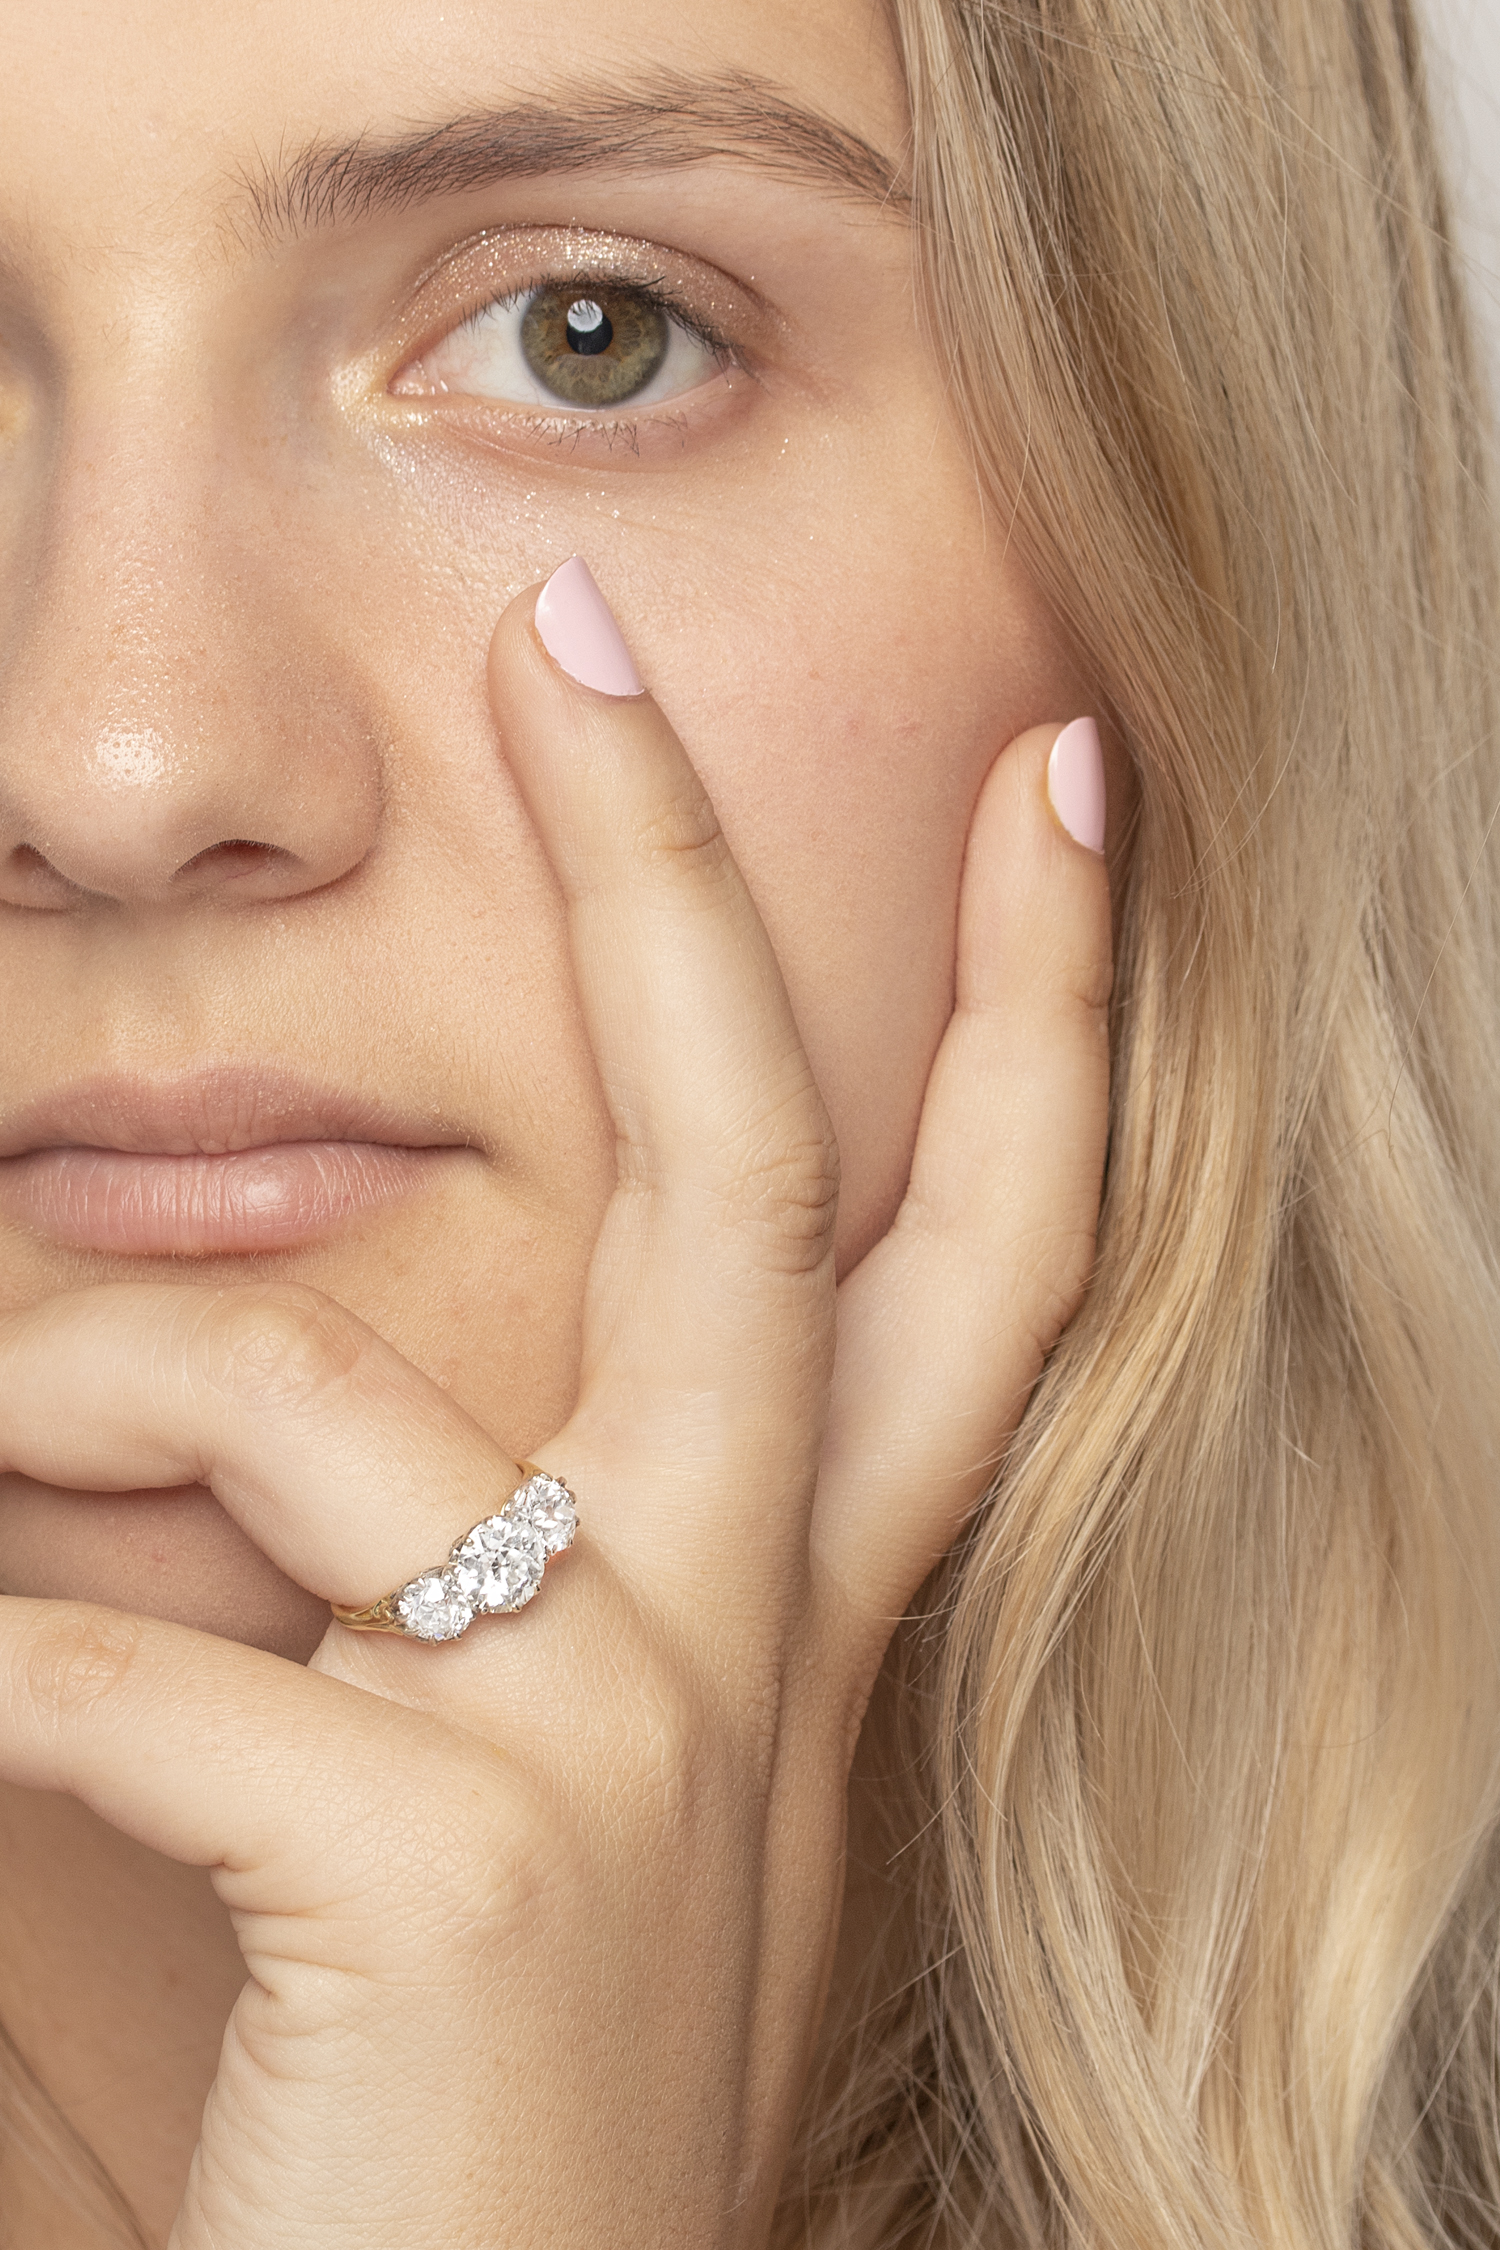 Women's Vintage Three Stone Engagement Ring Set